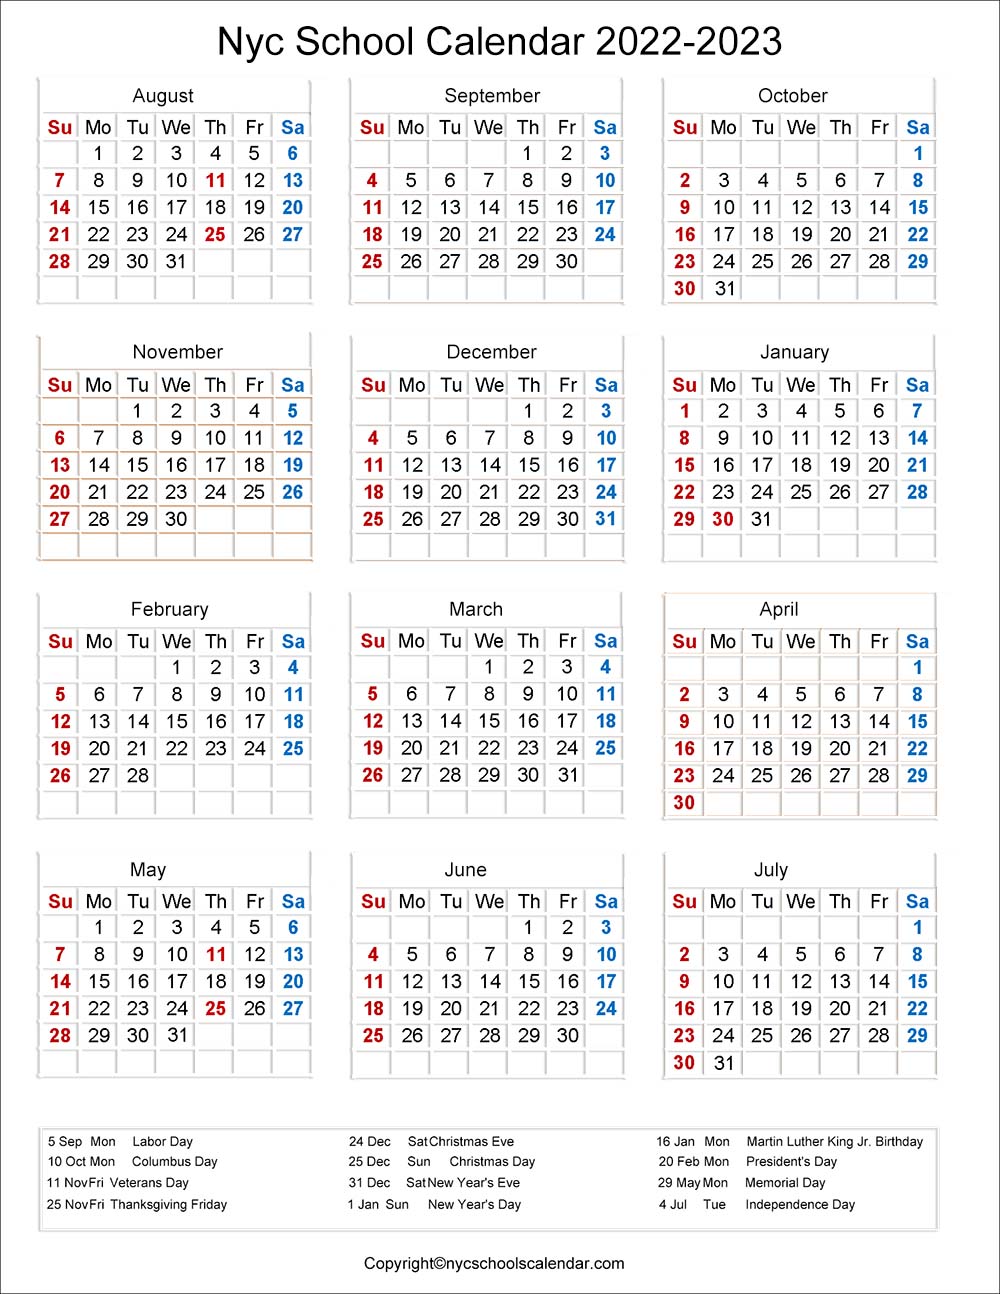 Doe Calendar 2022 23 ❤️Nyc School Holidays Calendar 2022-2023 ✓